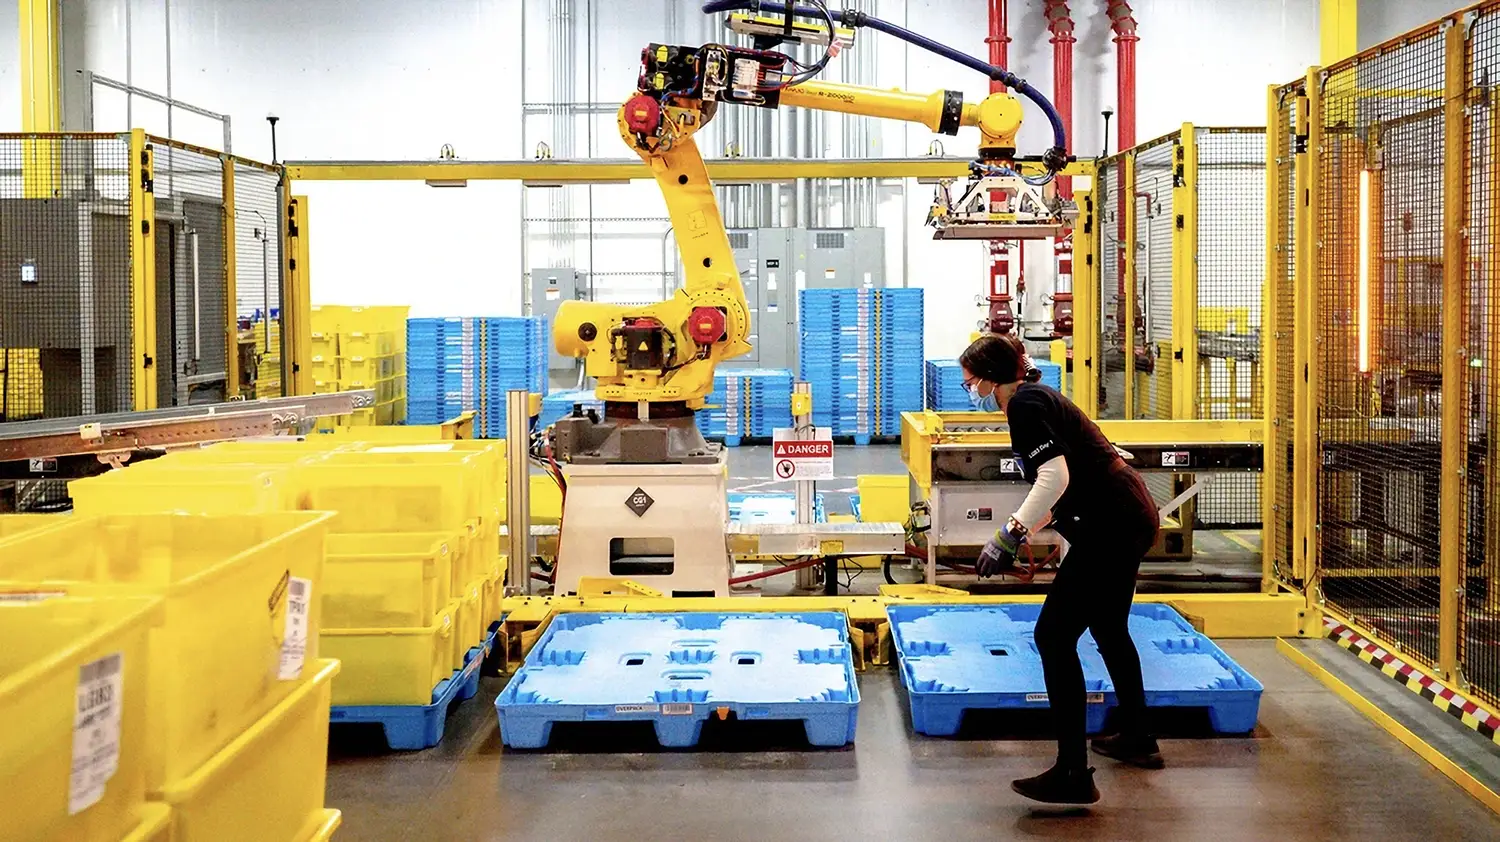 A human works alongside mesh walls, yellow bins, blue pallots, and a large robotic arm.